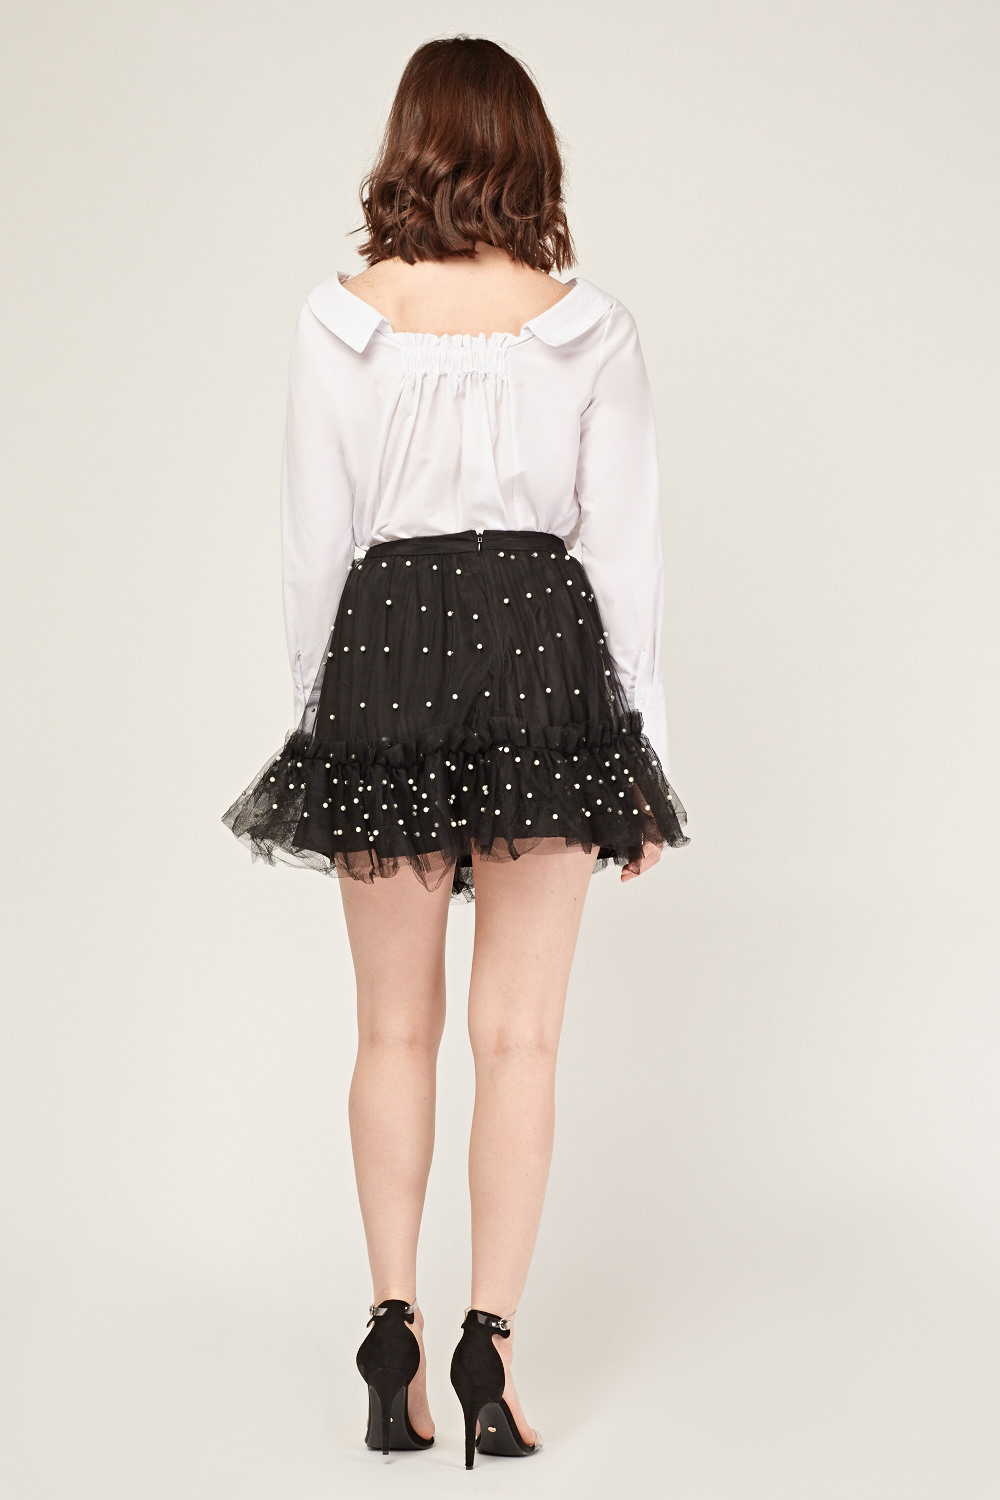 Embellished Organza Overlay Mini Skirt - Just $3